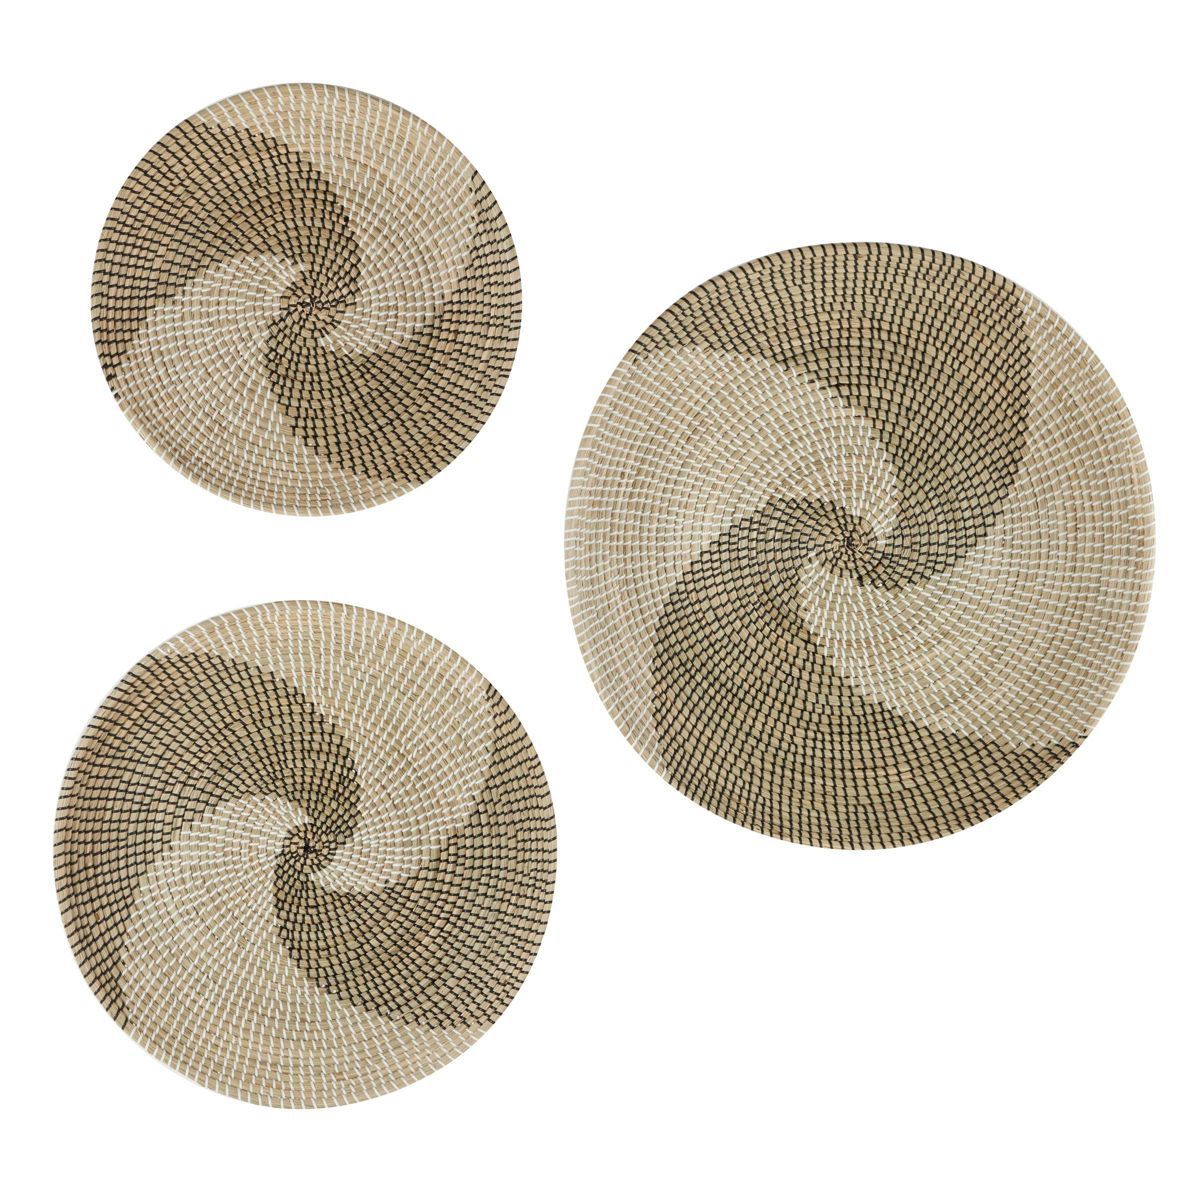 Seagrass Plate Handmade Basket Wall Decor Set of 3 Brown - Olivia & May | Target